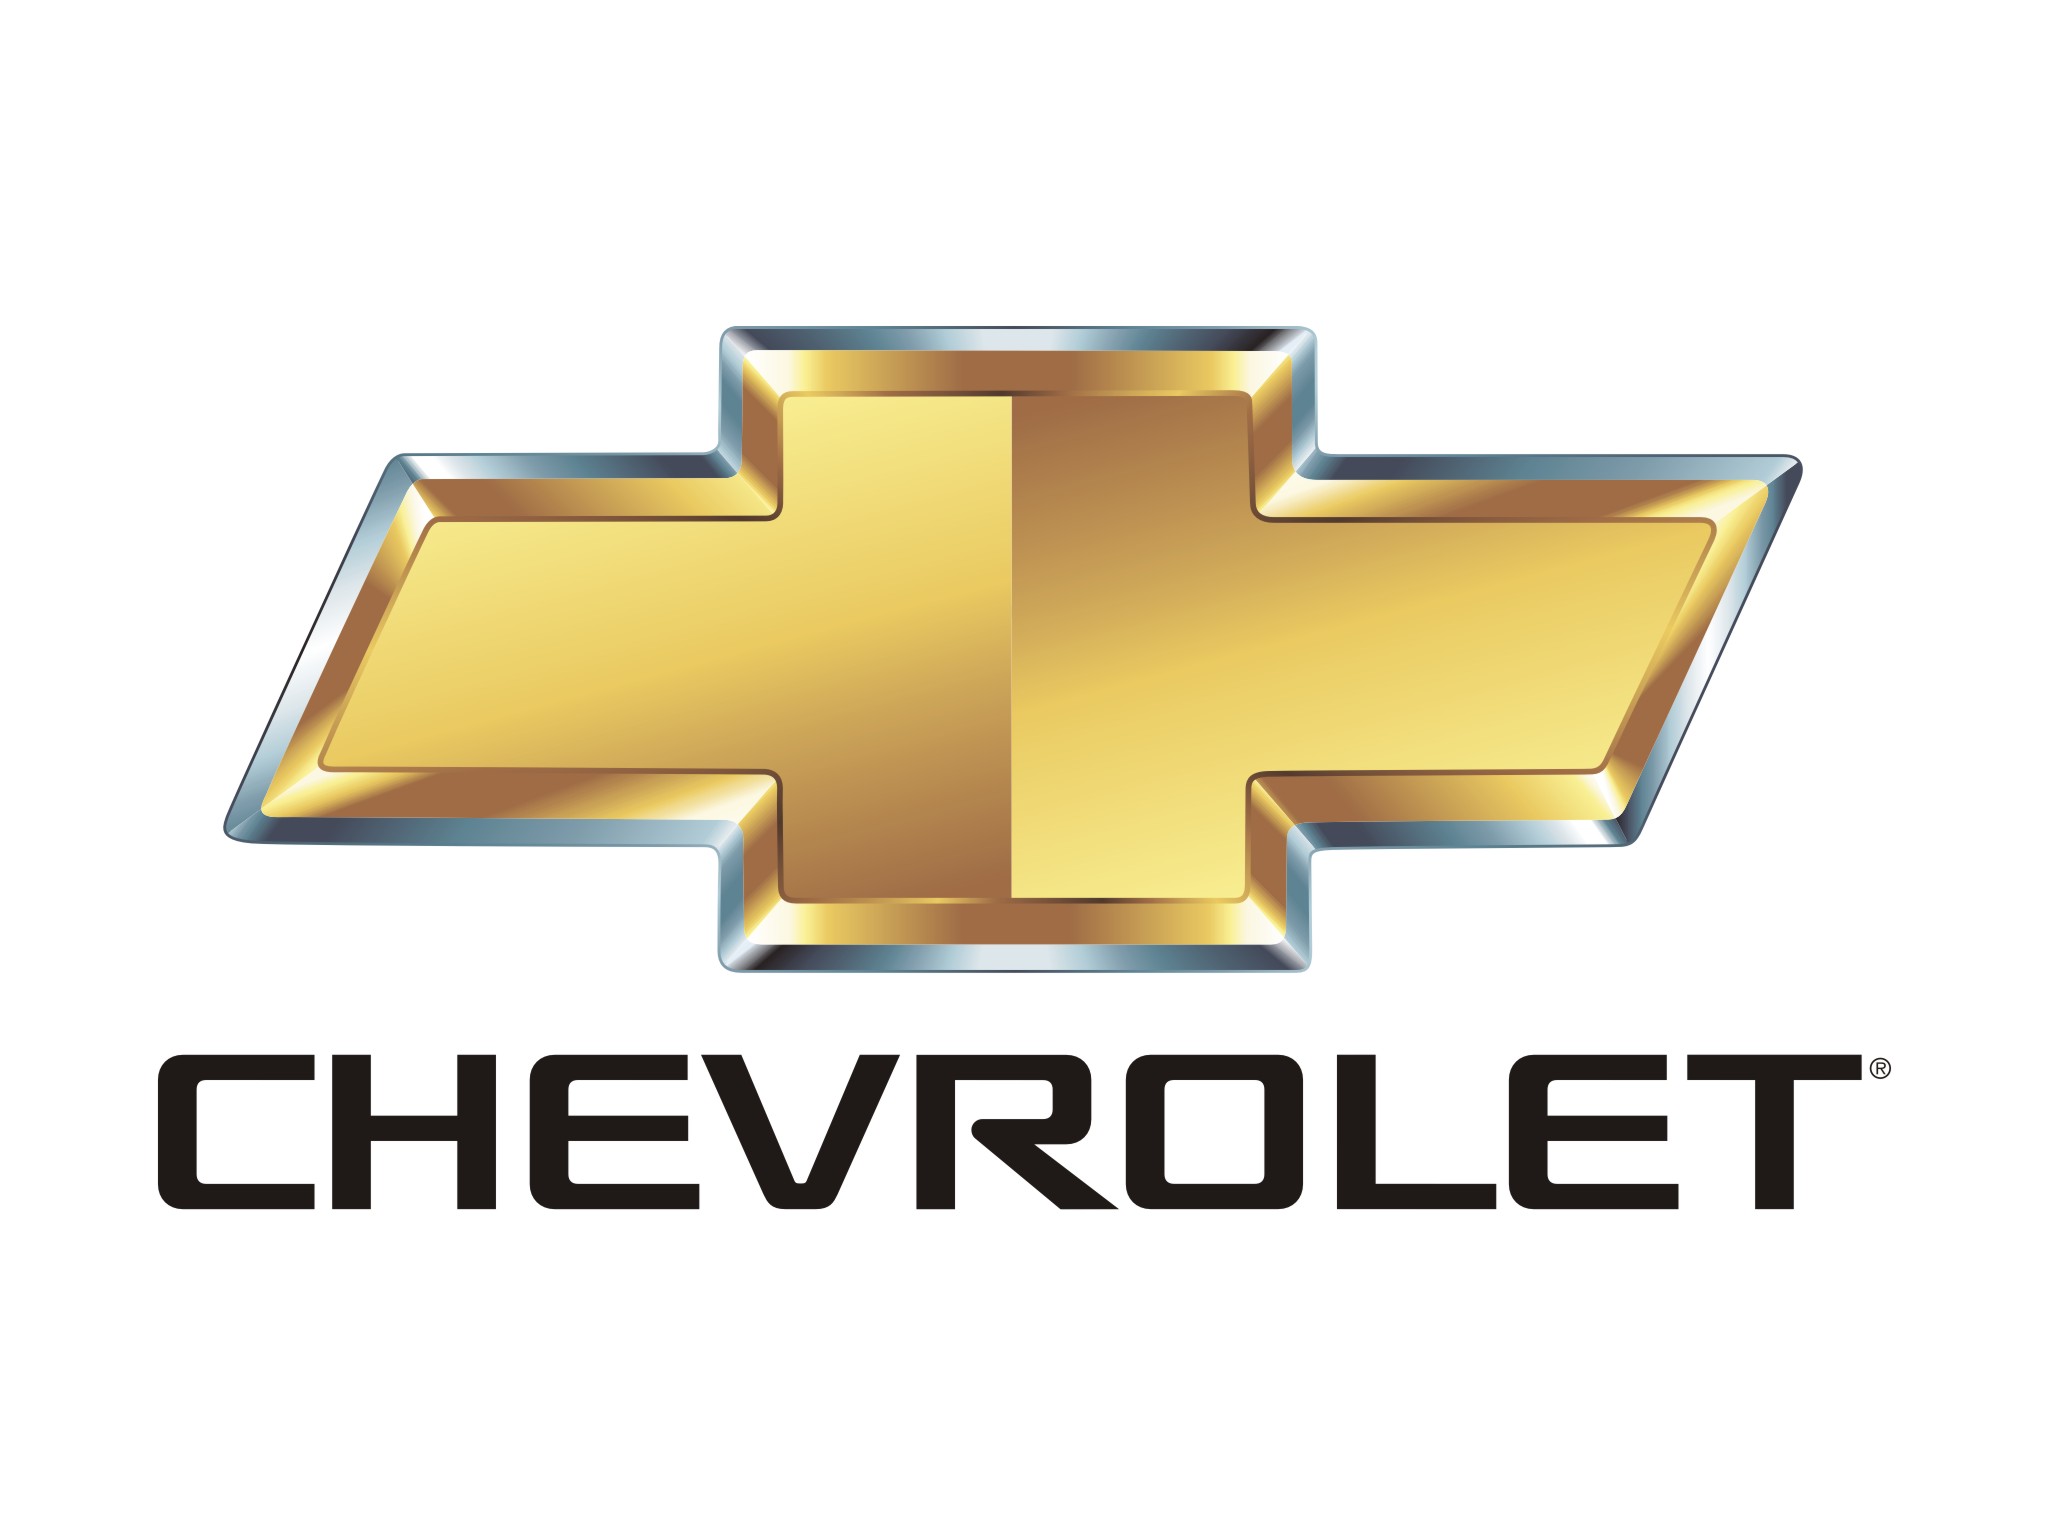 Chevy logo wallpaper jpg